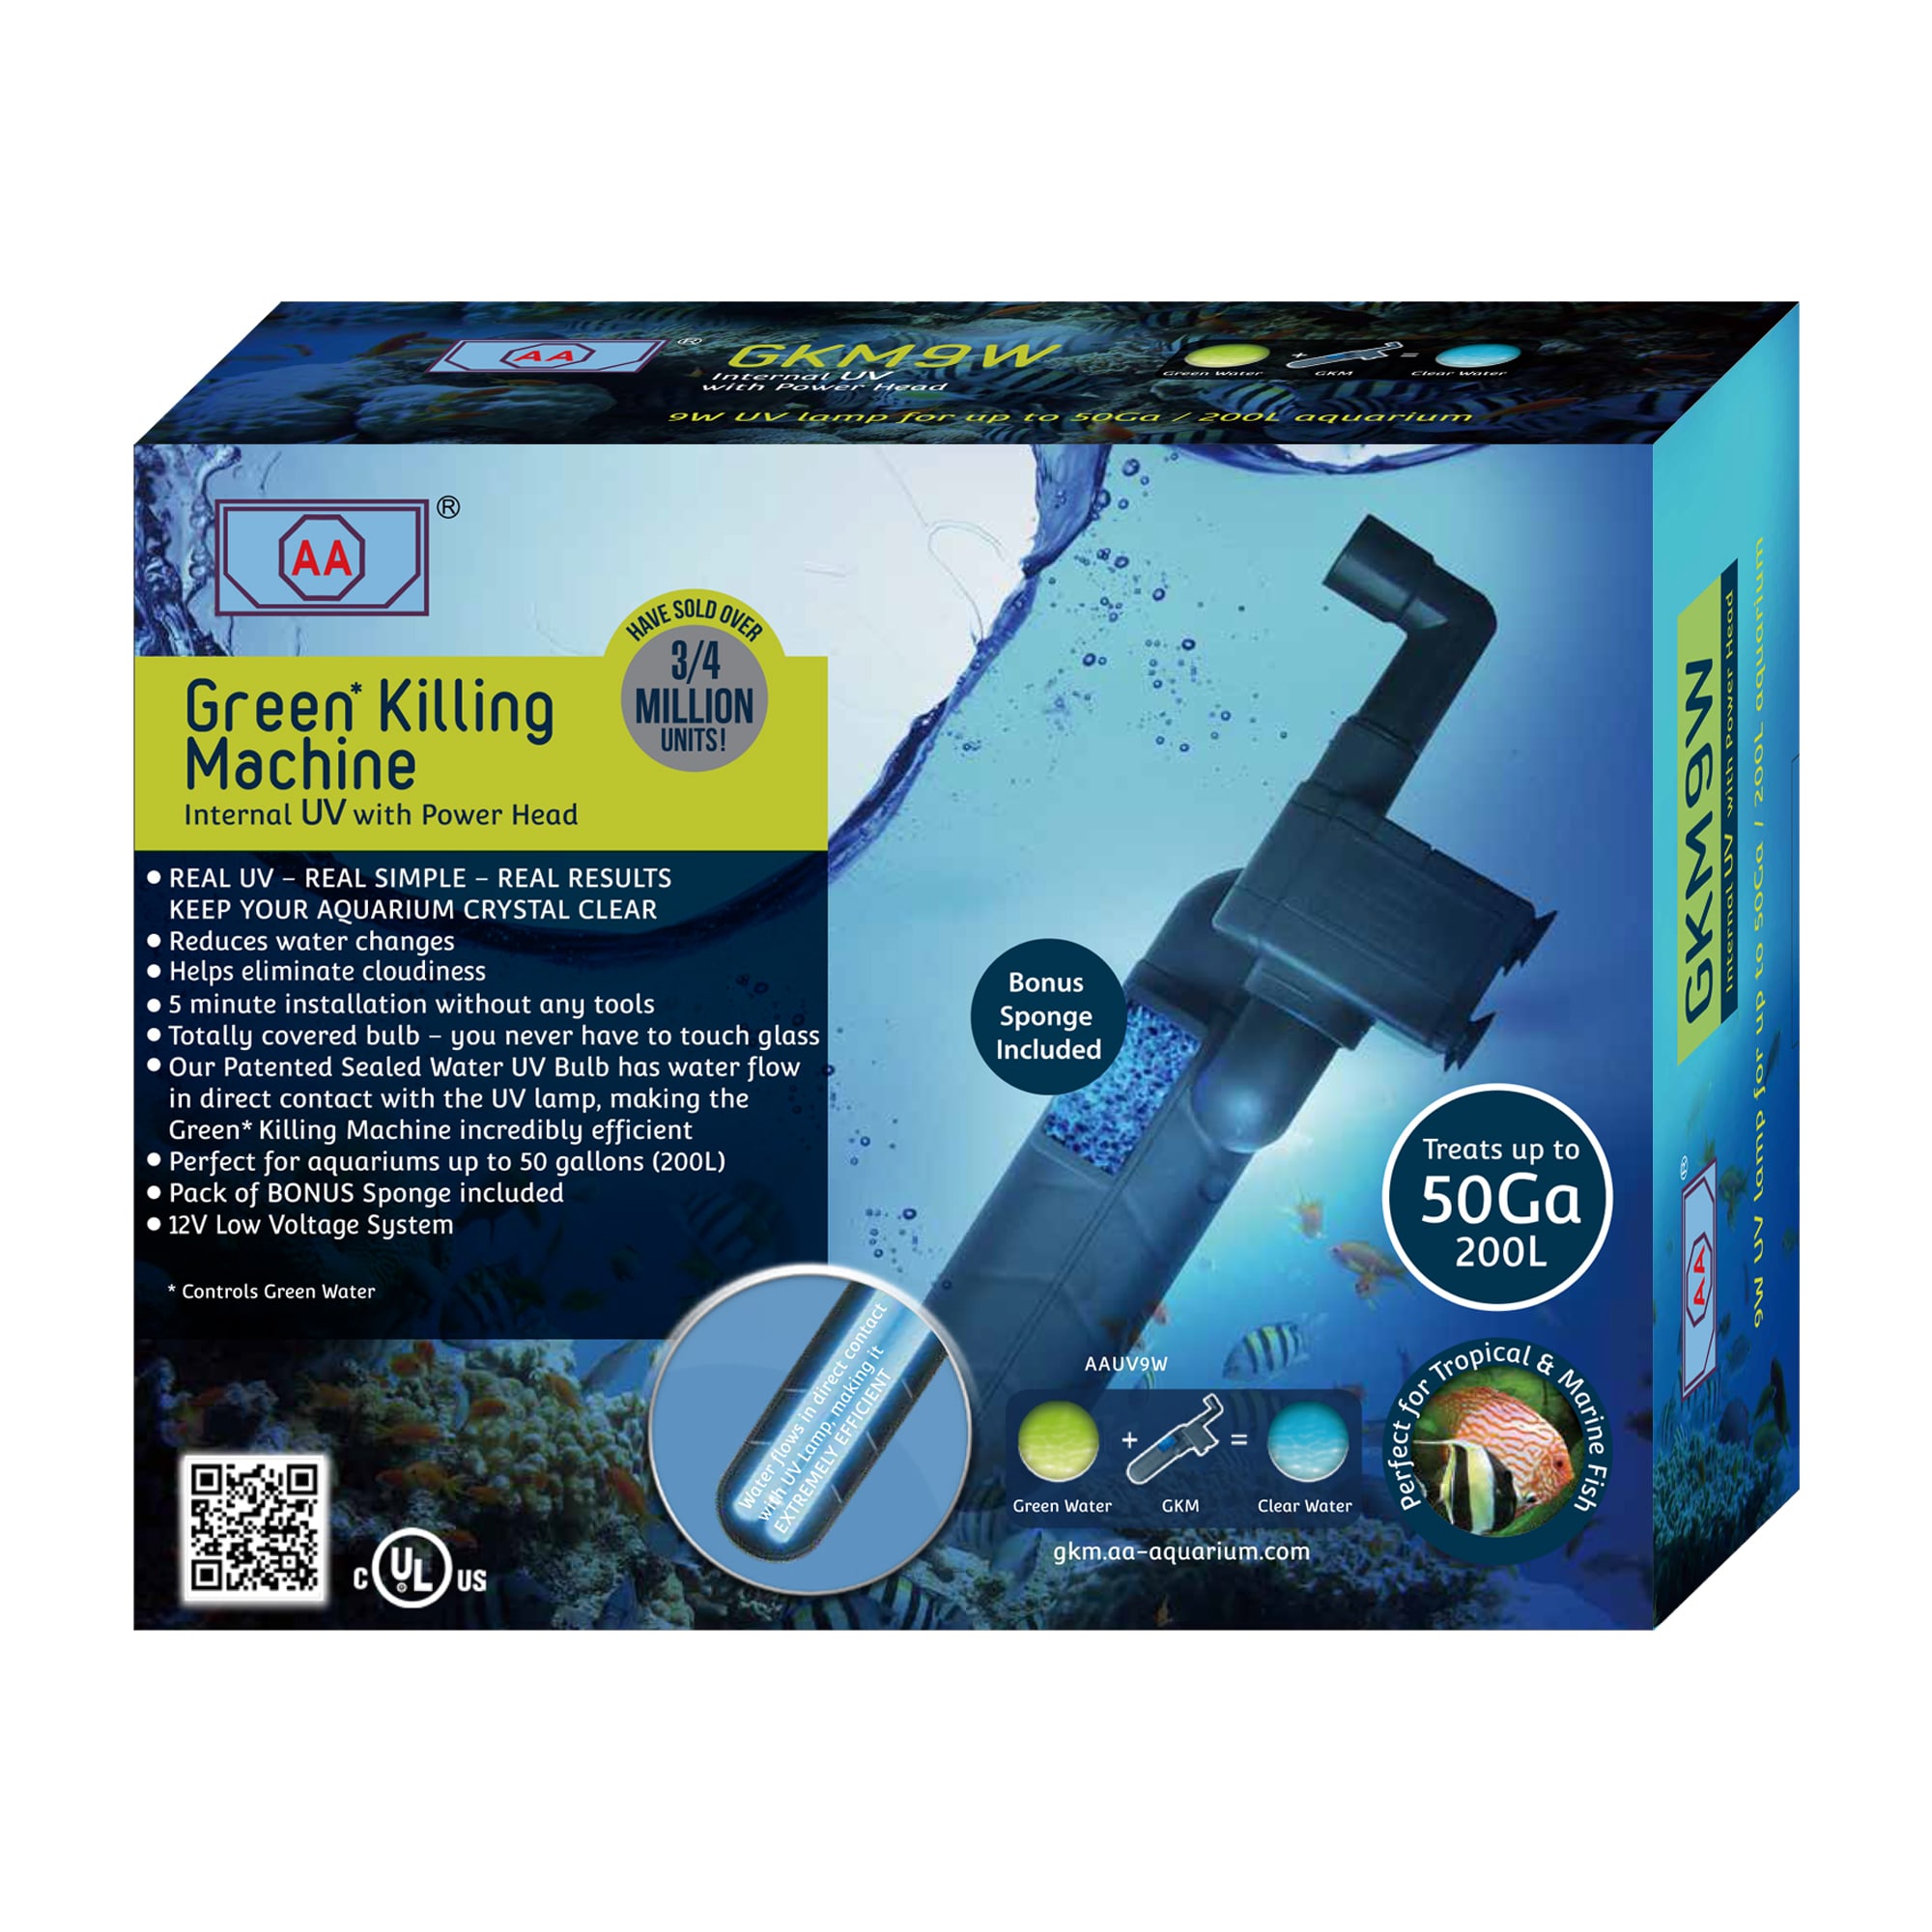 AA Aquarium Green killing Machine 9W Internal UV for Aquariums up to 50Ga